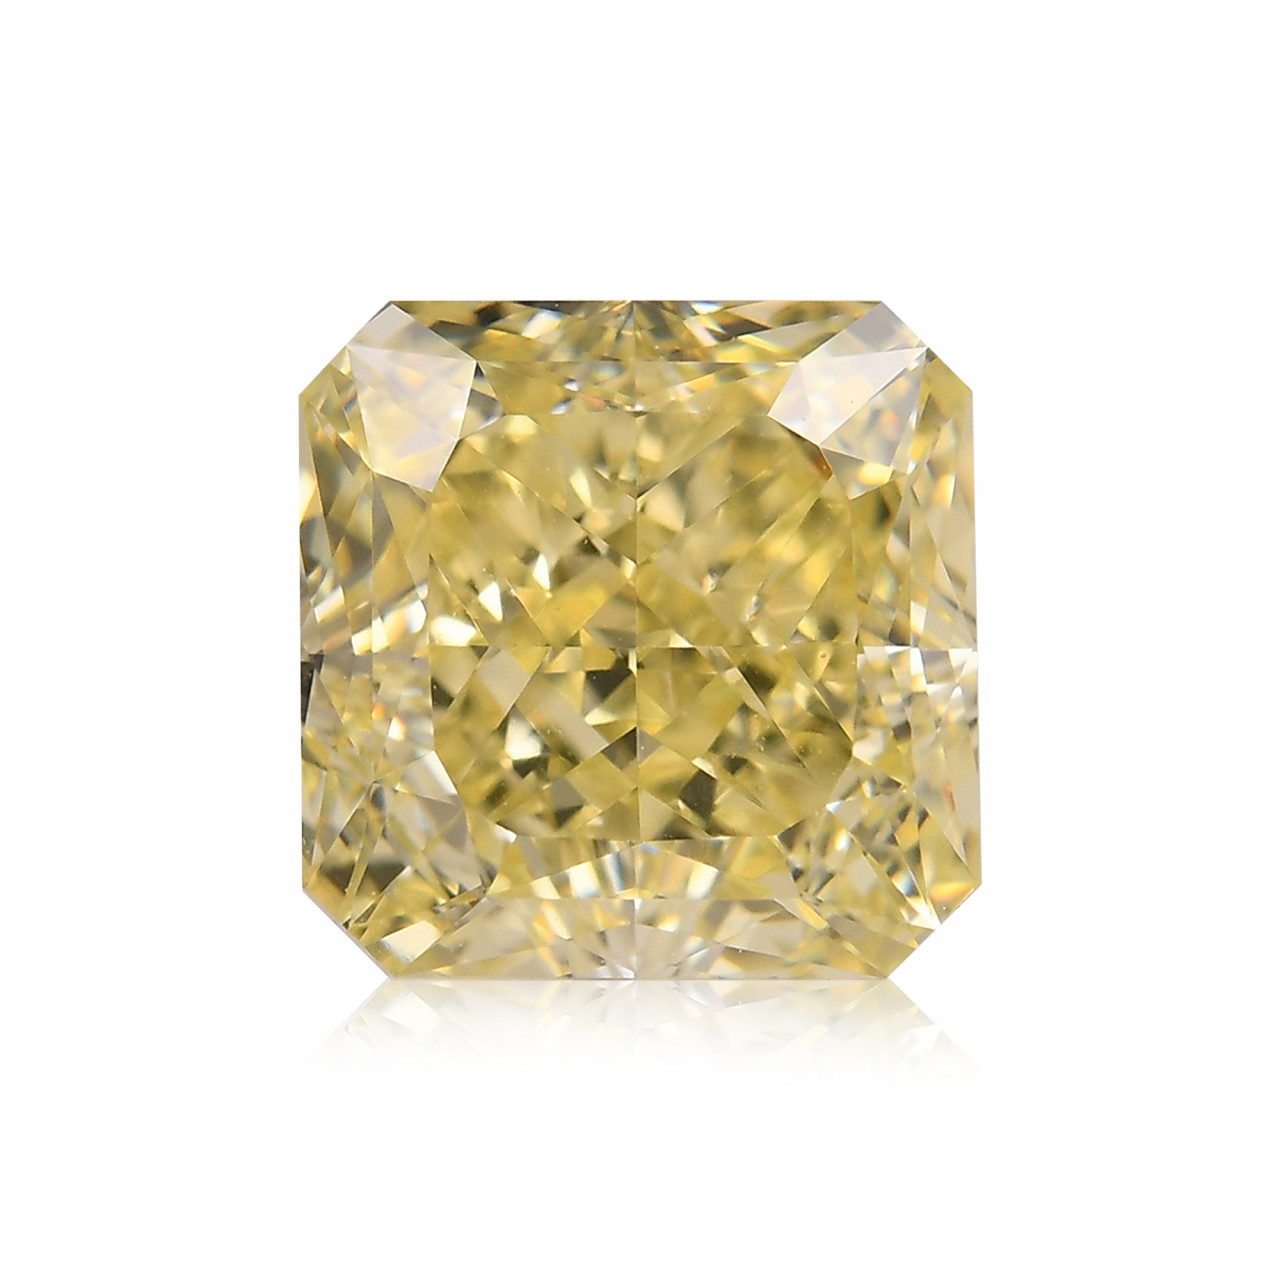 2.11 carat, Fancy Light Yellow Diamond, Radiant Shape, VVS2 Clarity ...